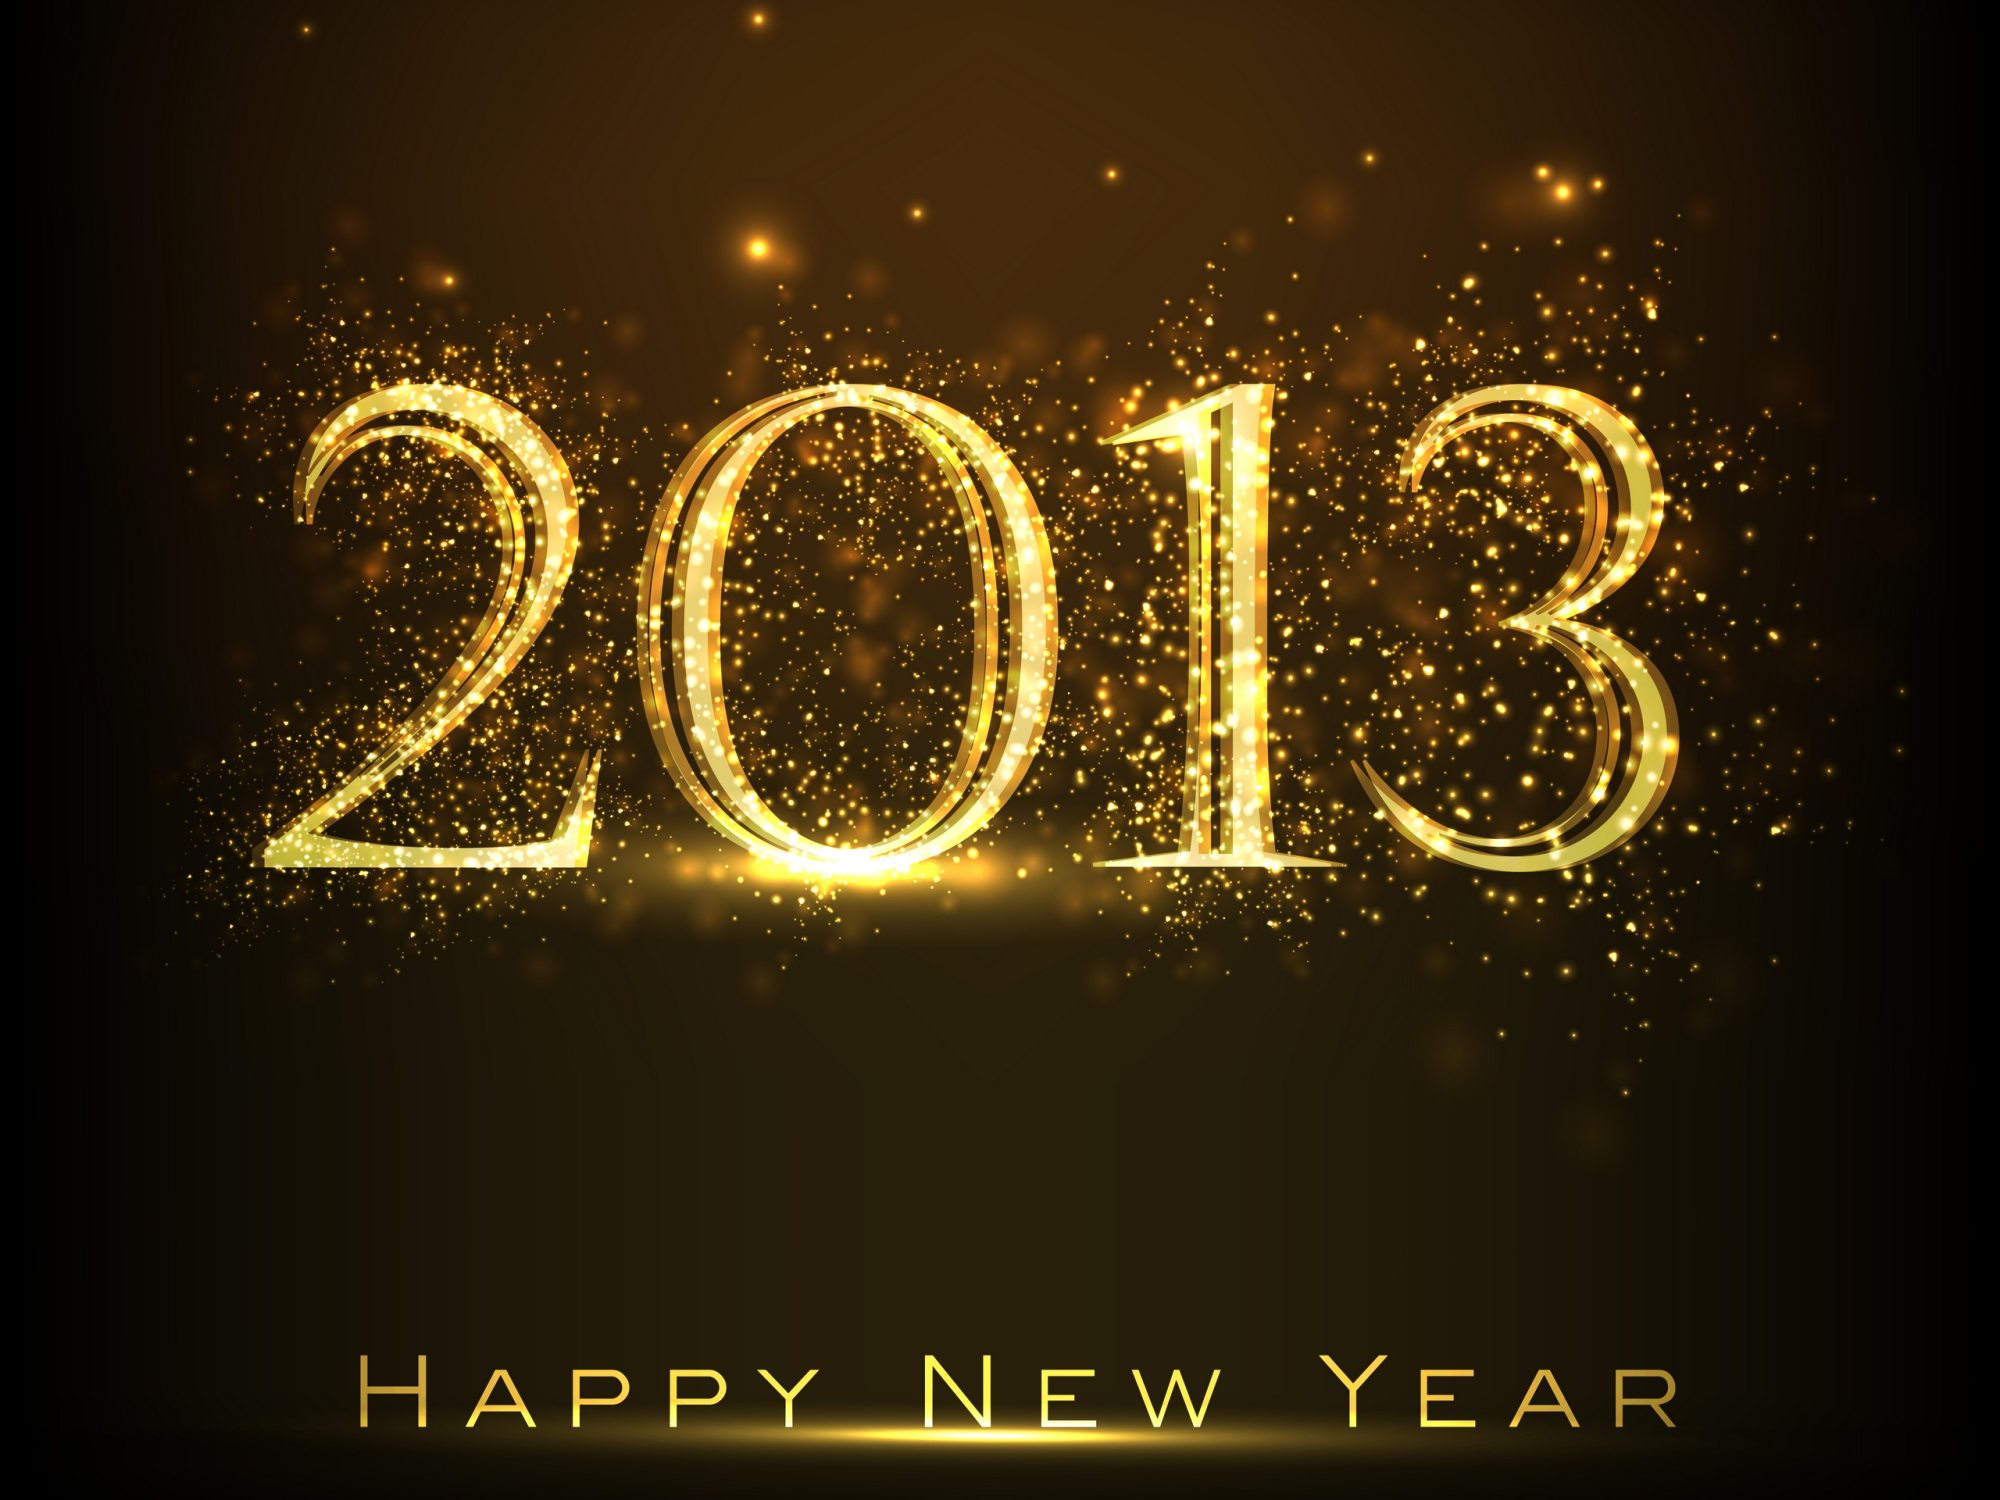 http://twinstrivia.com/wp-content/uploads/2013/01/2013-new-year.jpg